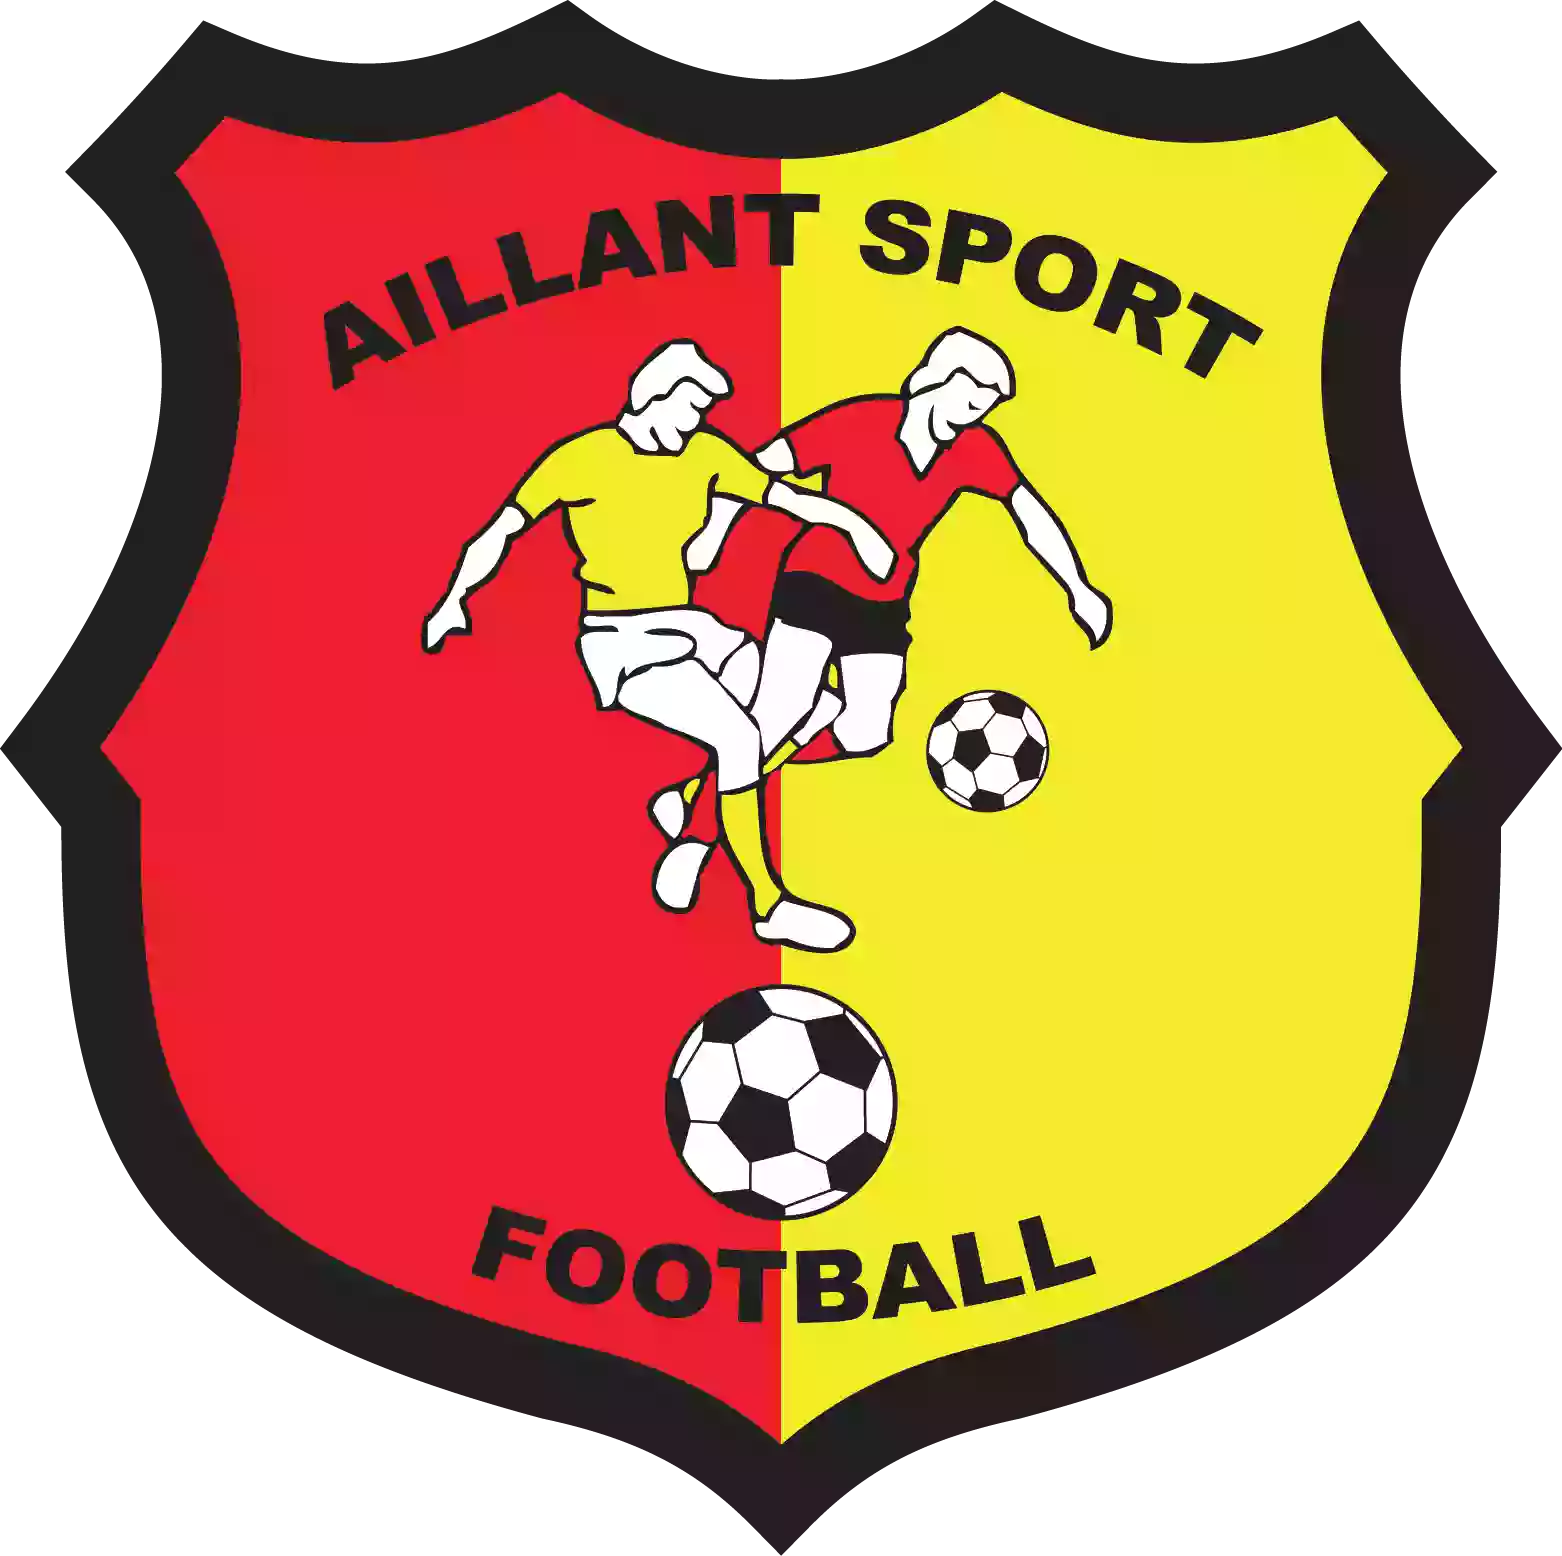 Aillant Sport Football